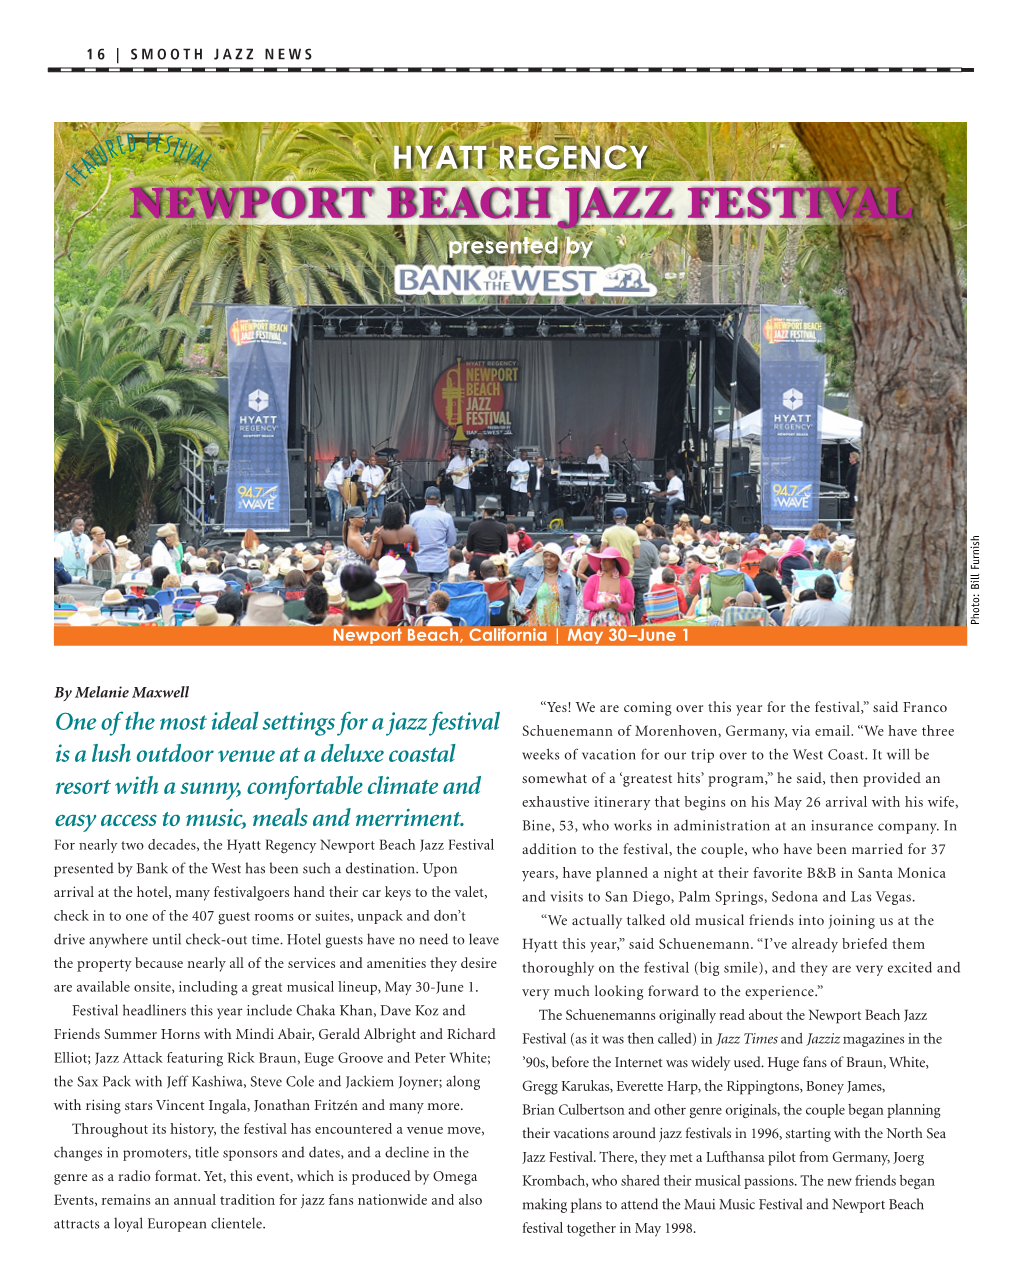 Hyatt Regency Newport Beach Jazz Festival Addition to the Festival, the